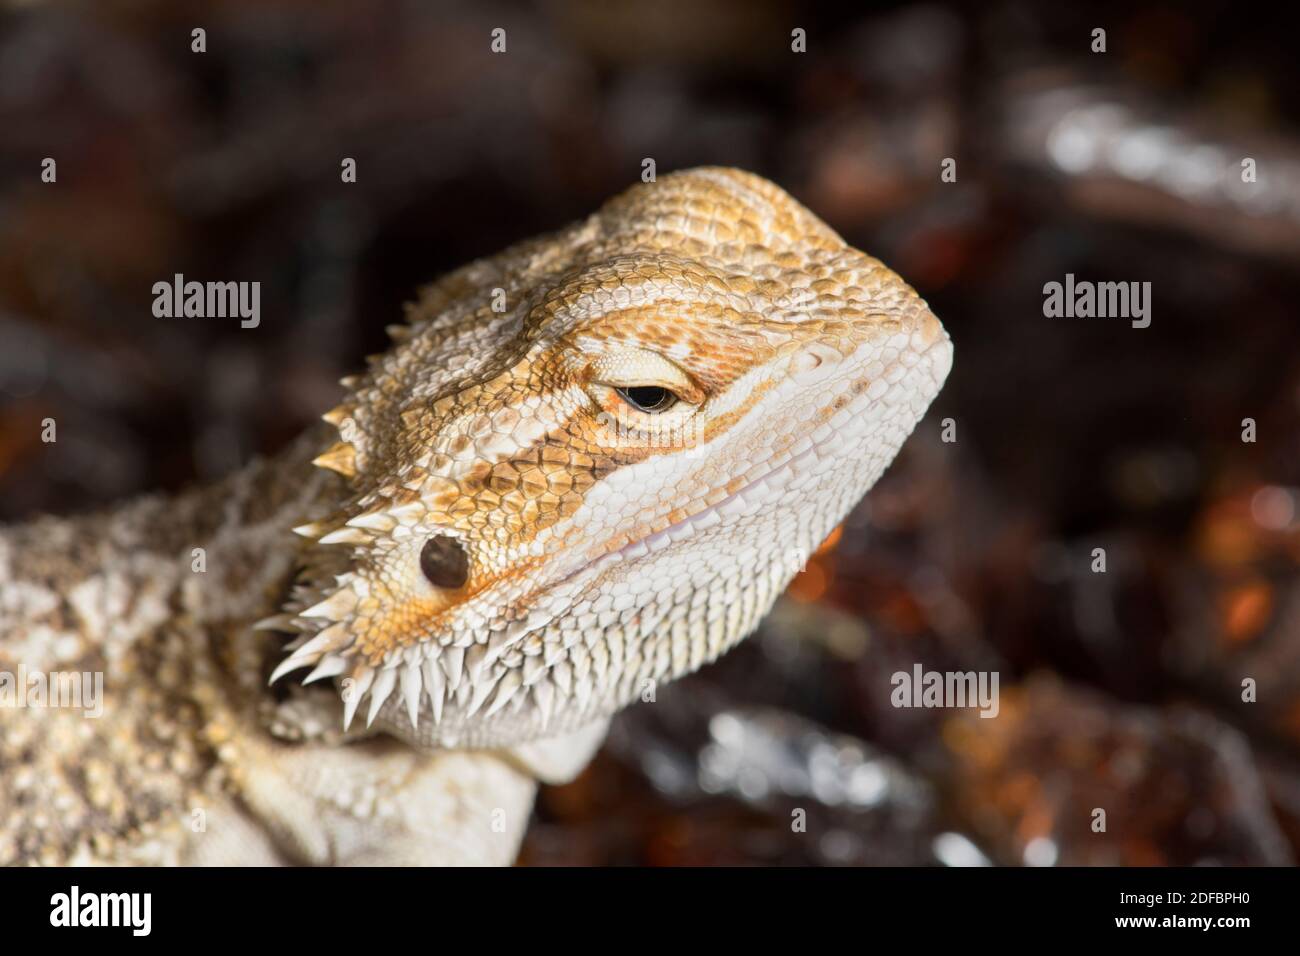 Detail macro shot of a bearded dragon. Stock Photo